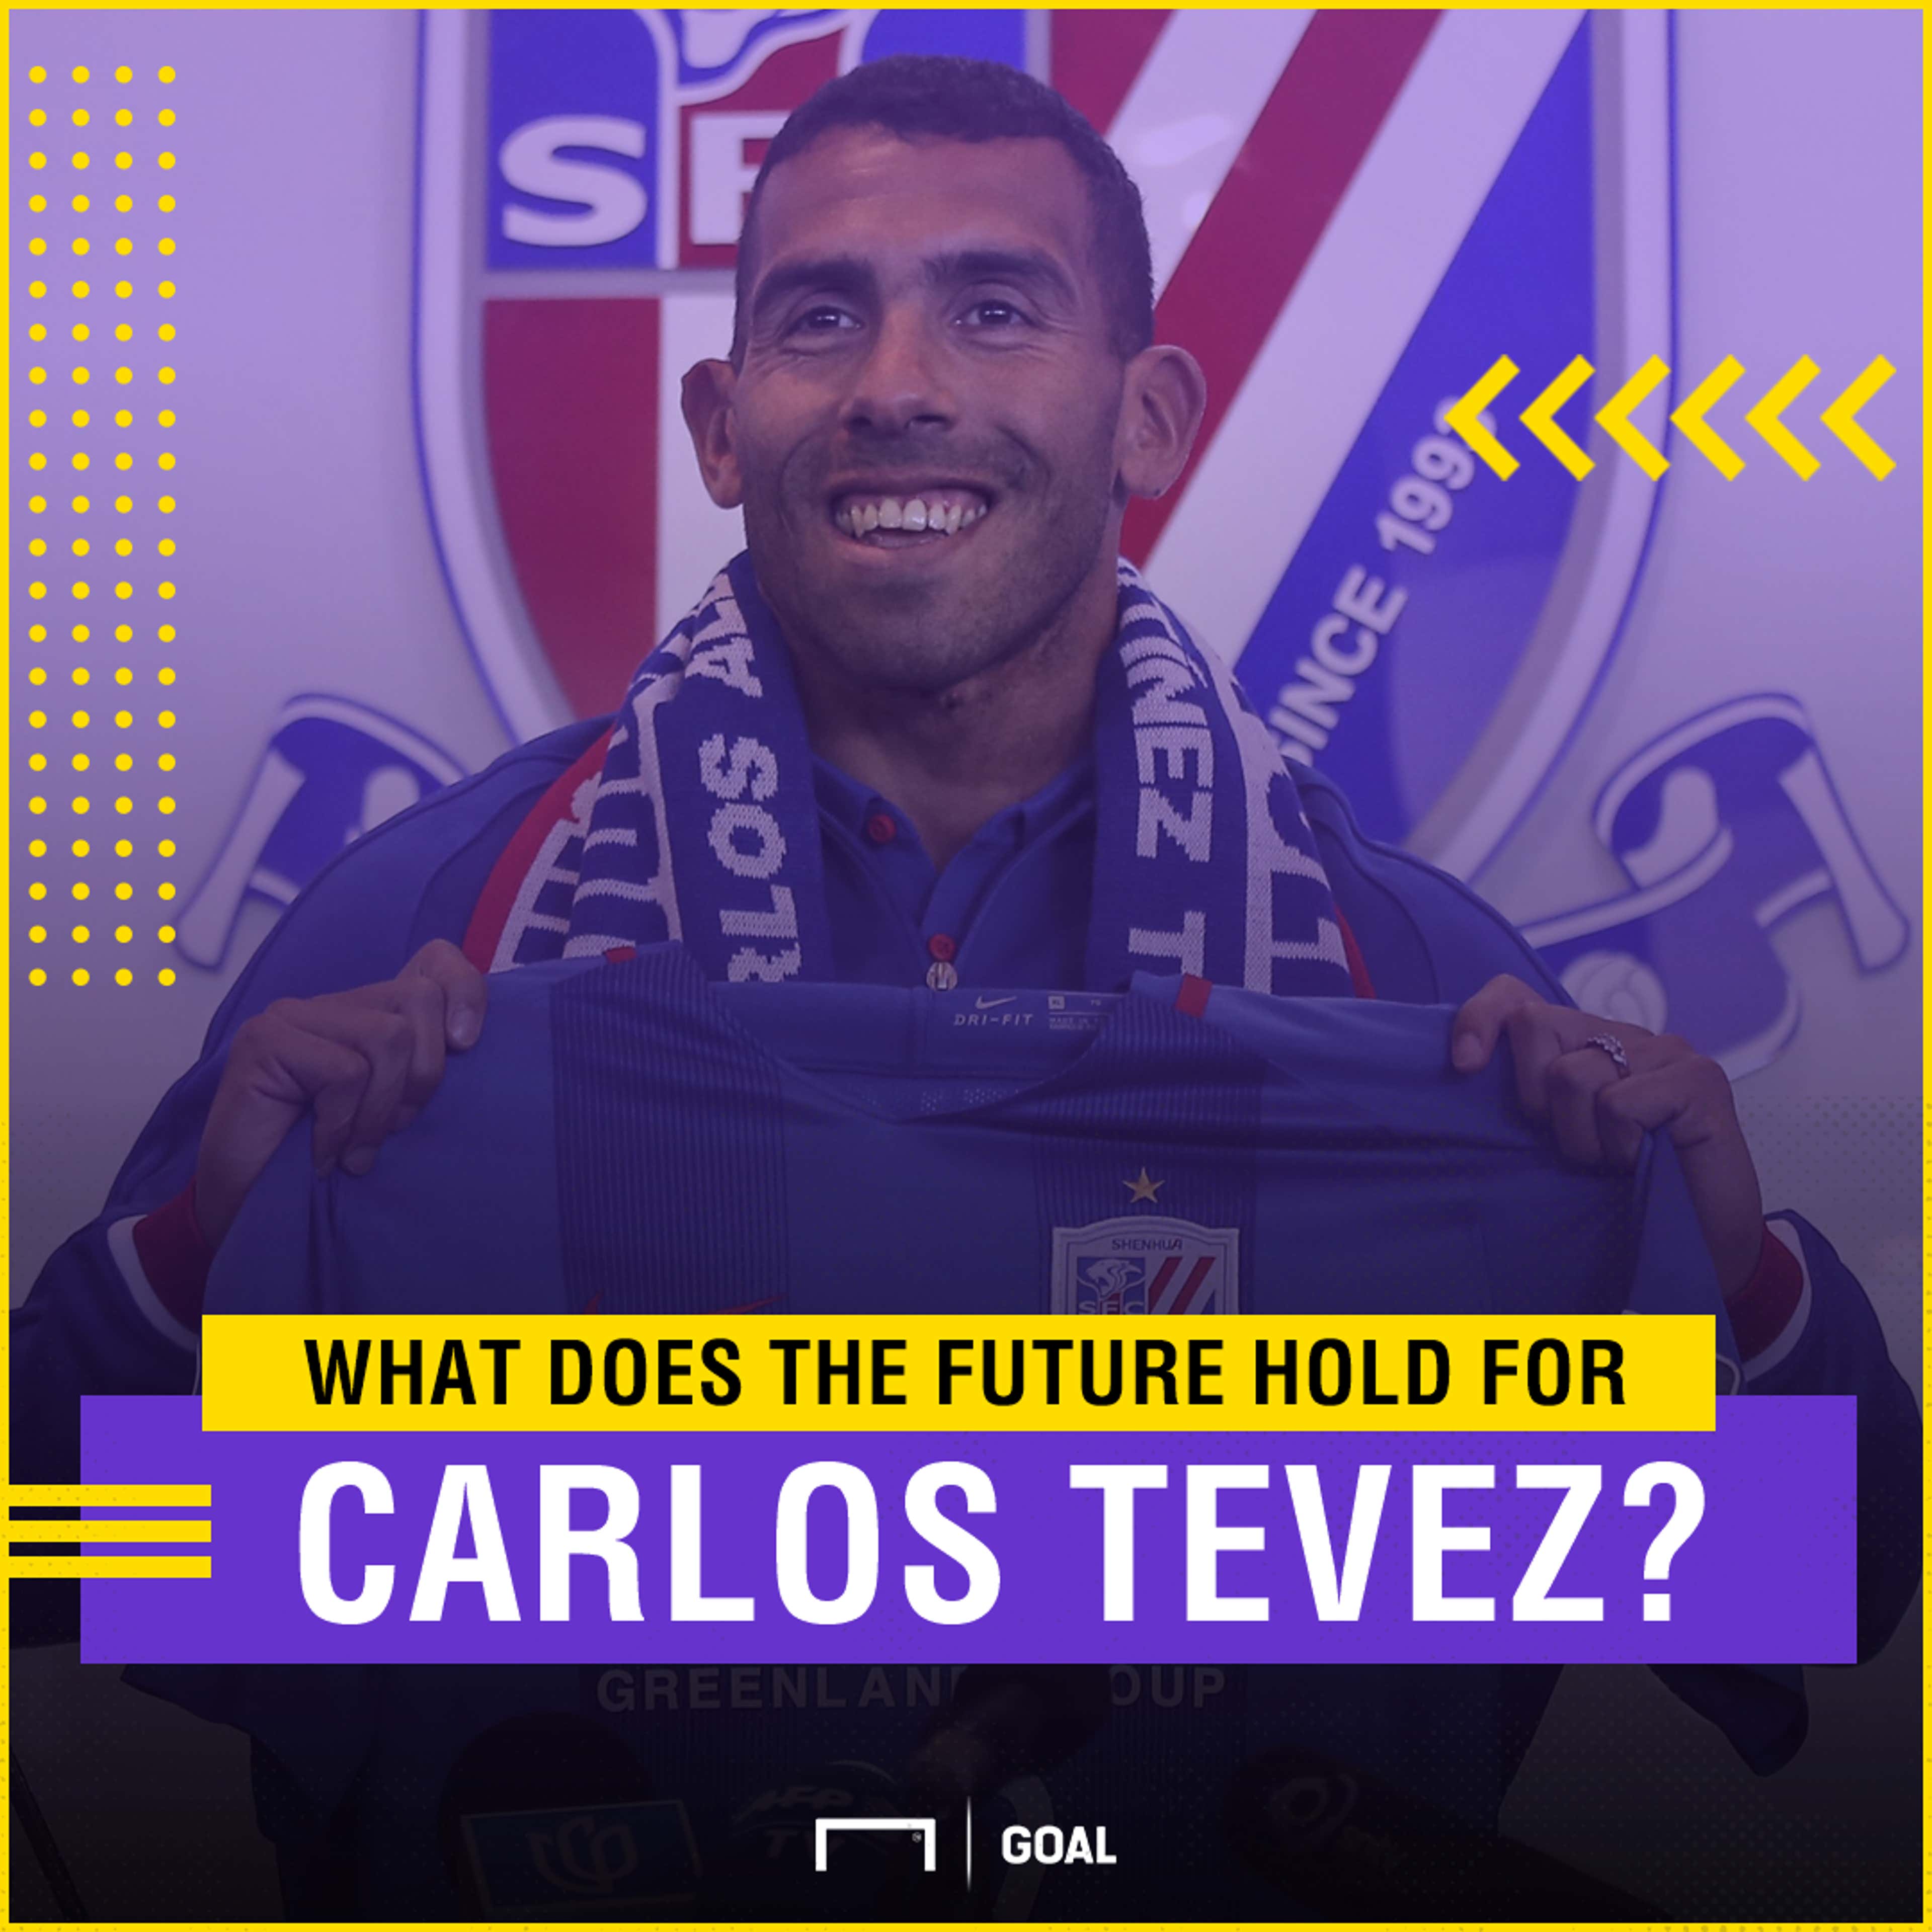 Carlos Tevez future?